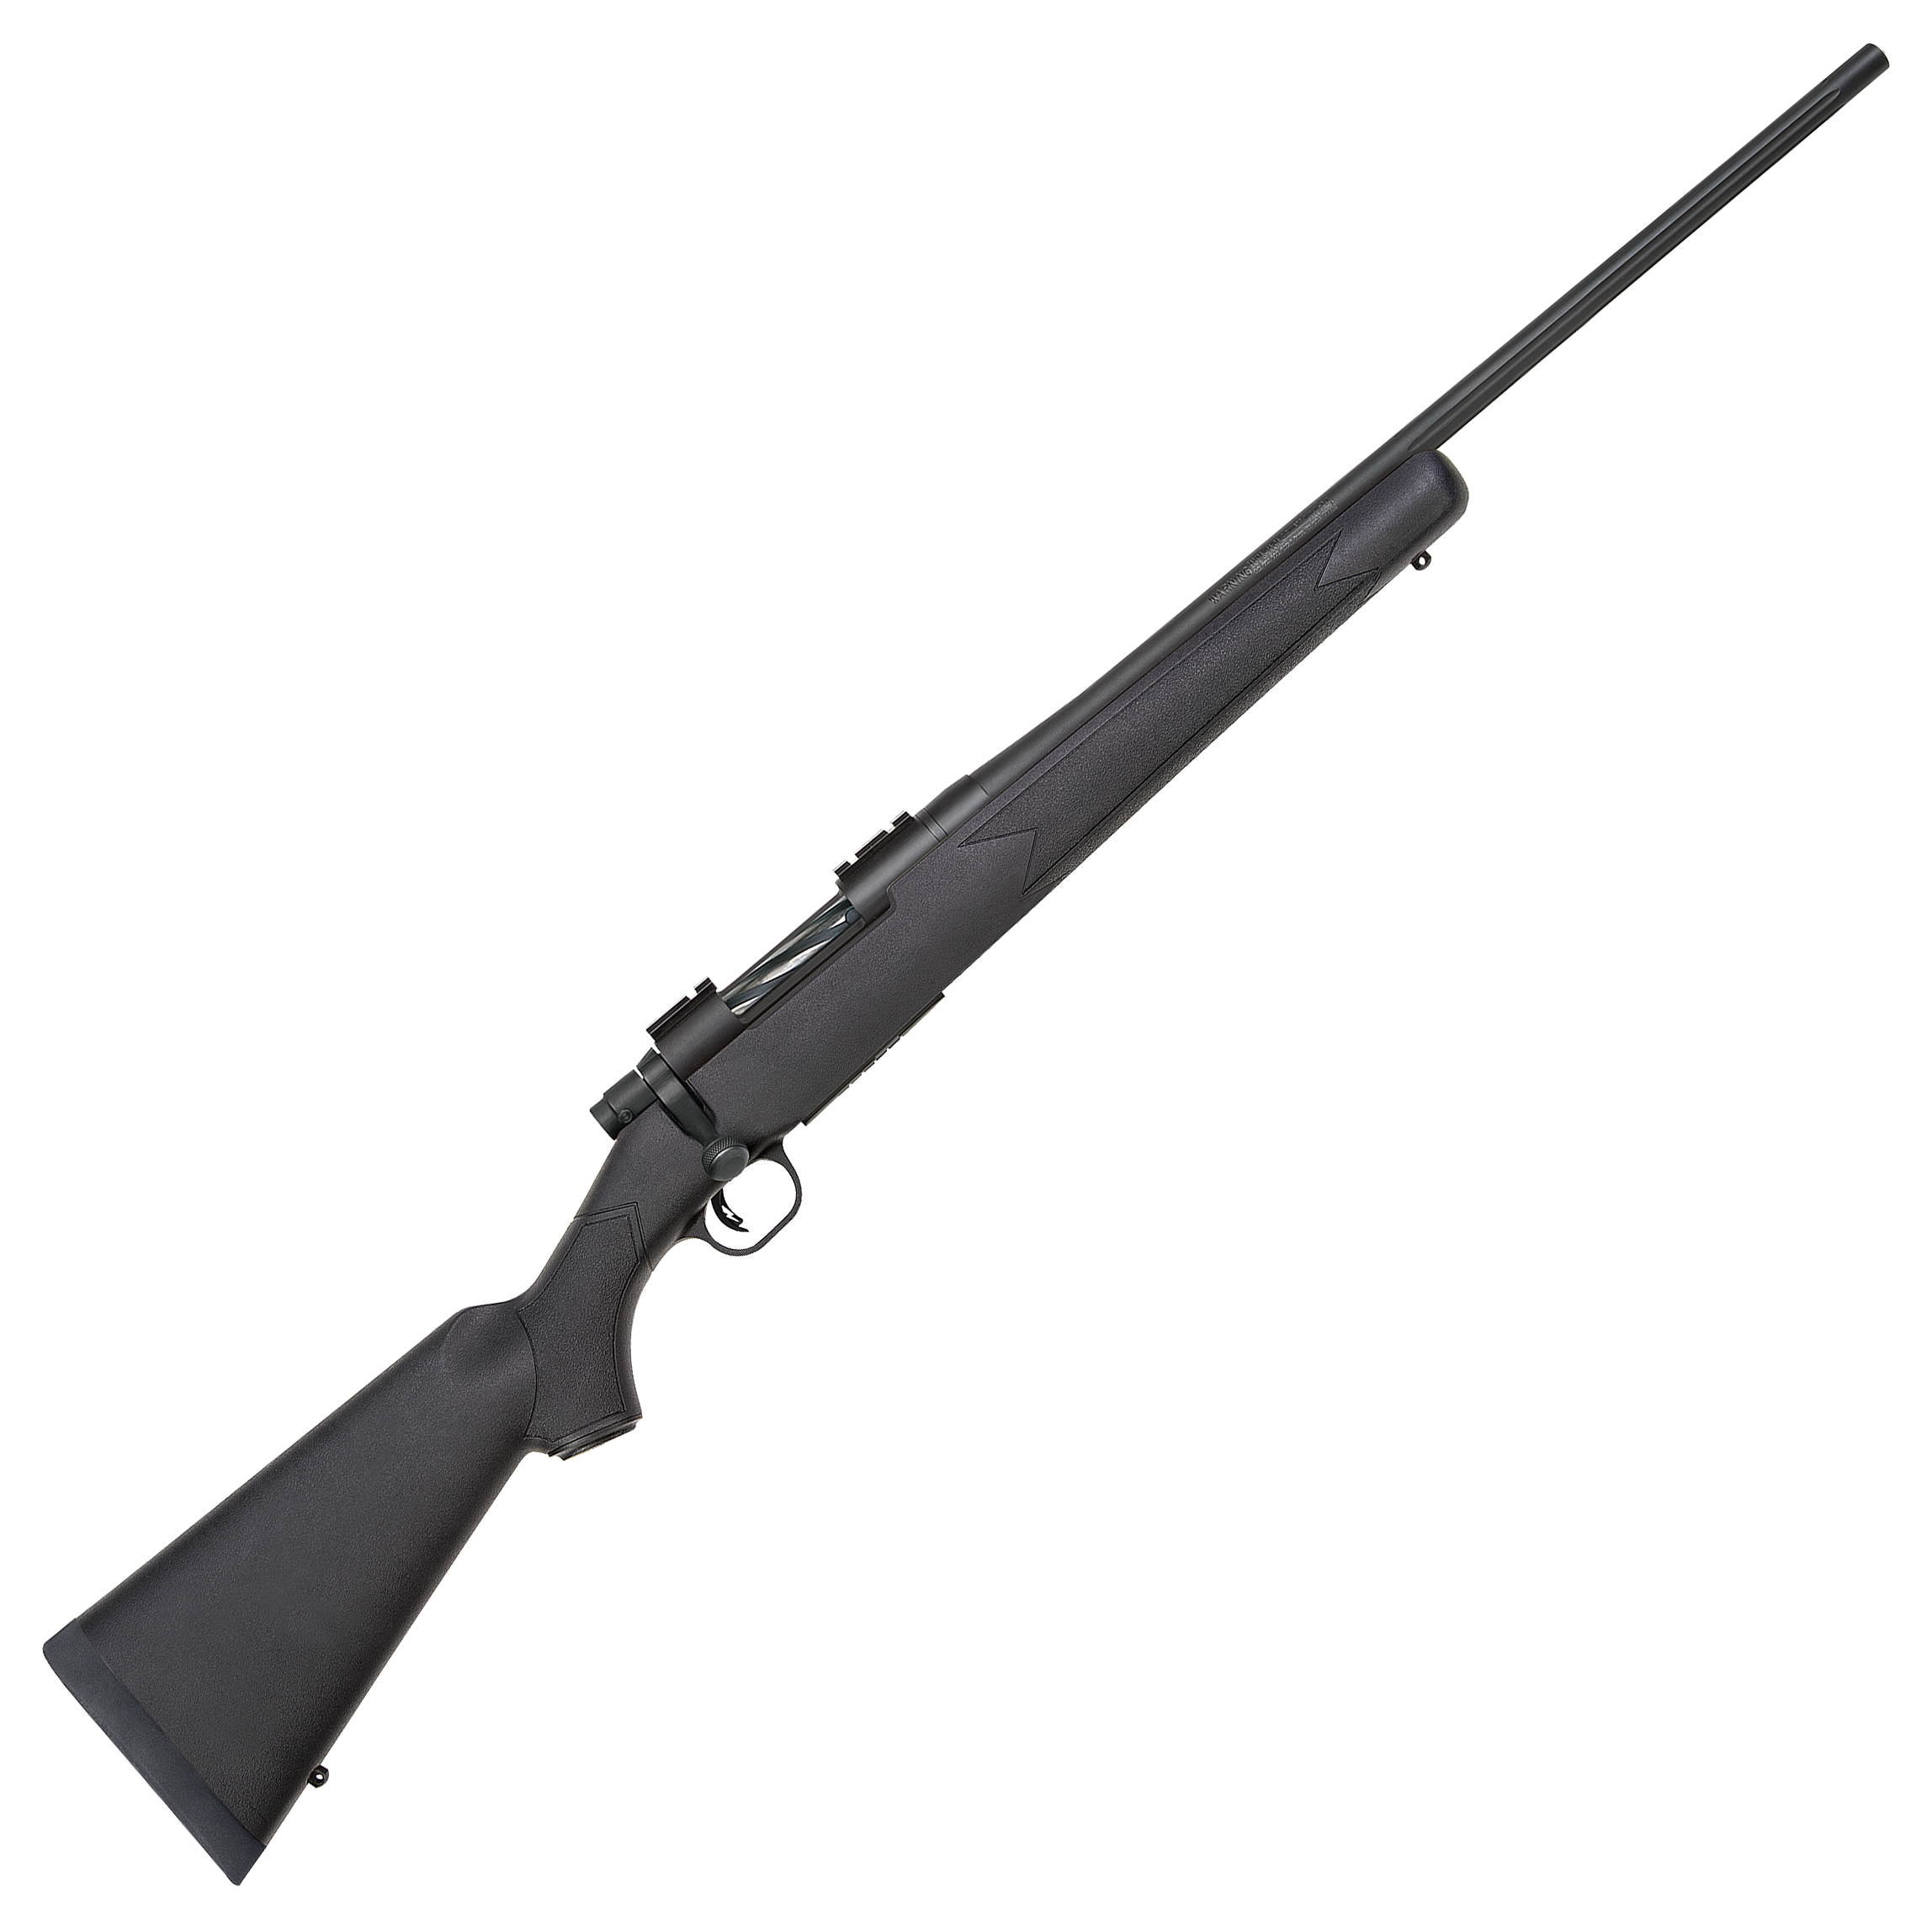 Mossberg 27851 Patriot Bolt Action Rifle 7MM-08 REM, RH, 22 in, Blue, Syn Stk, 5+1 Rnd, LBA Adj Trgr, 0902-1253